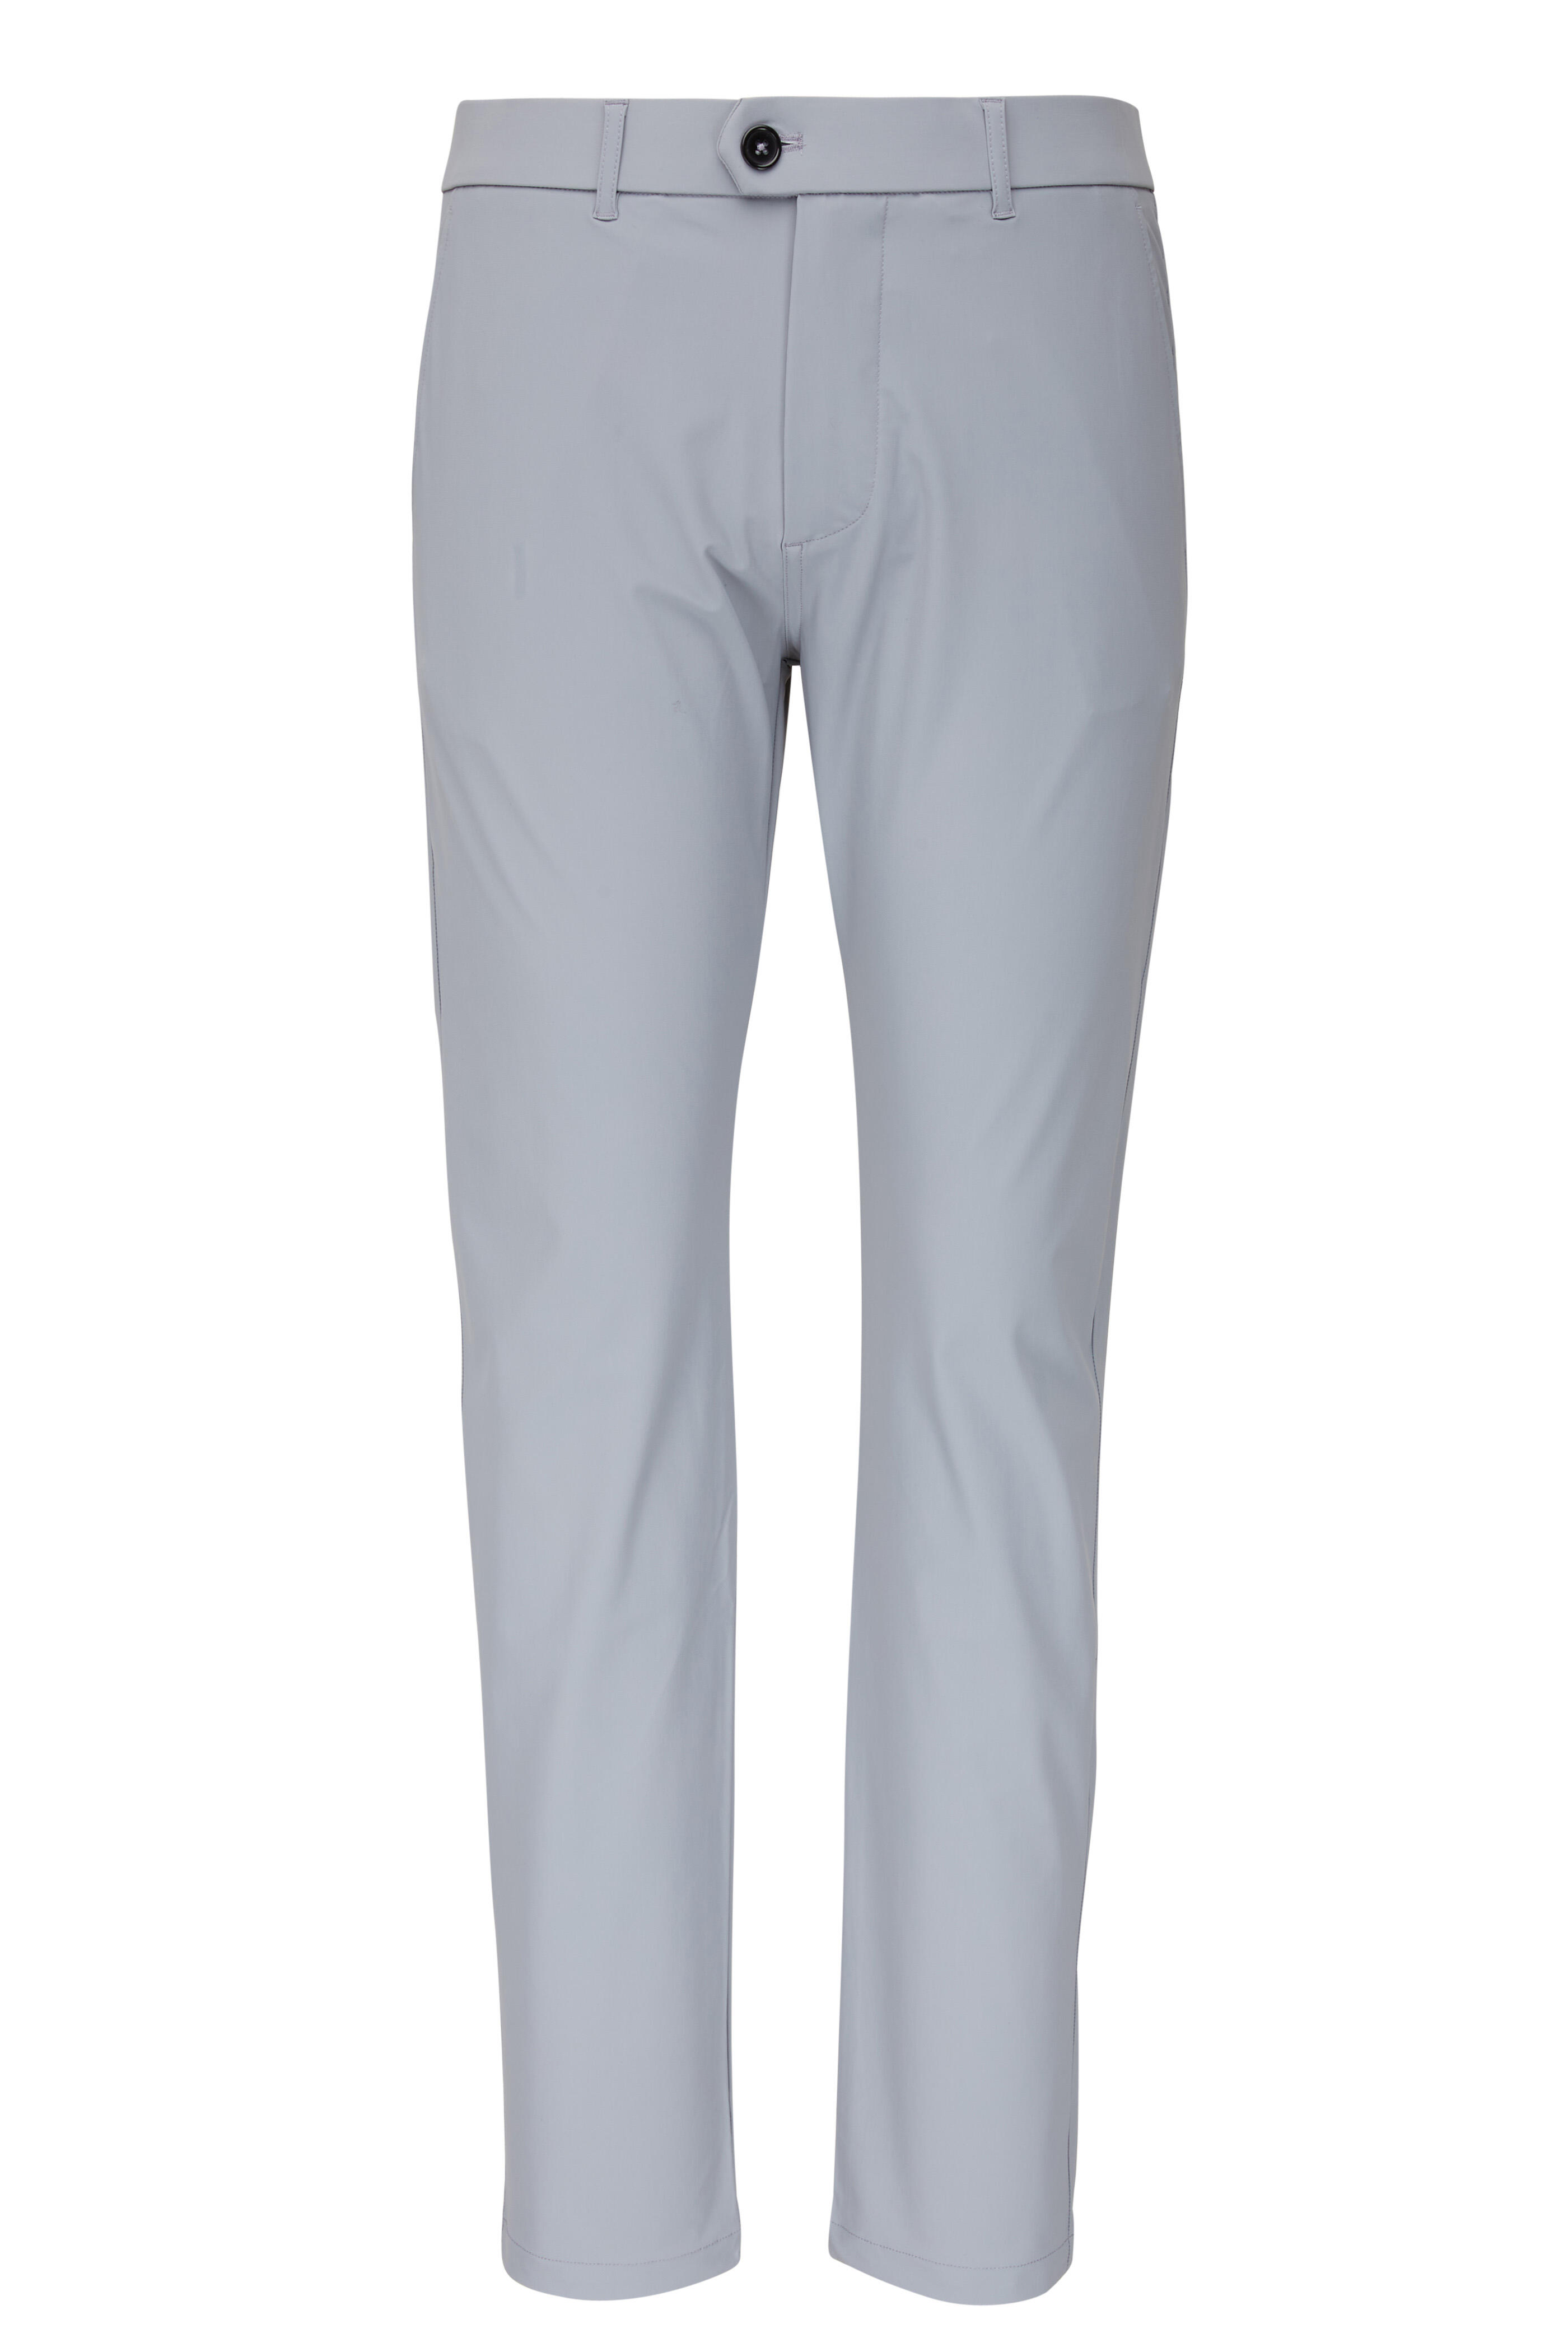 Greyson - Montauk Slate Gray Pant | Mitchell Stores